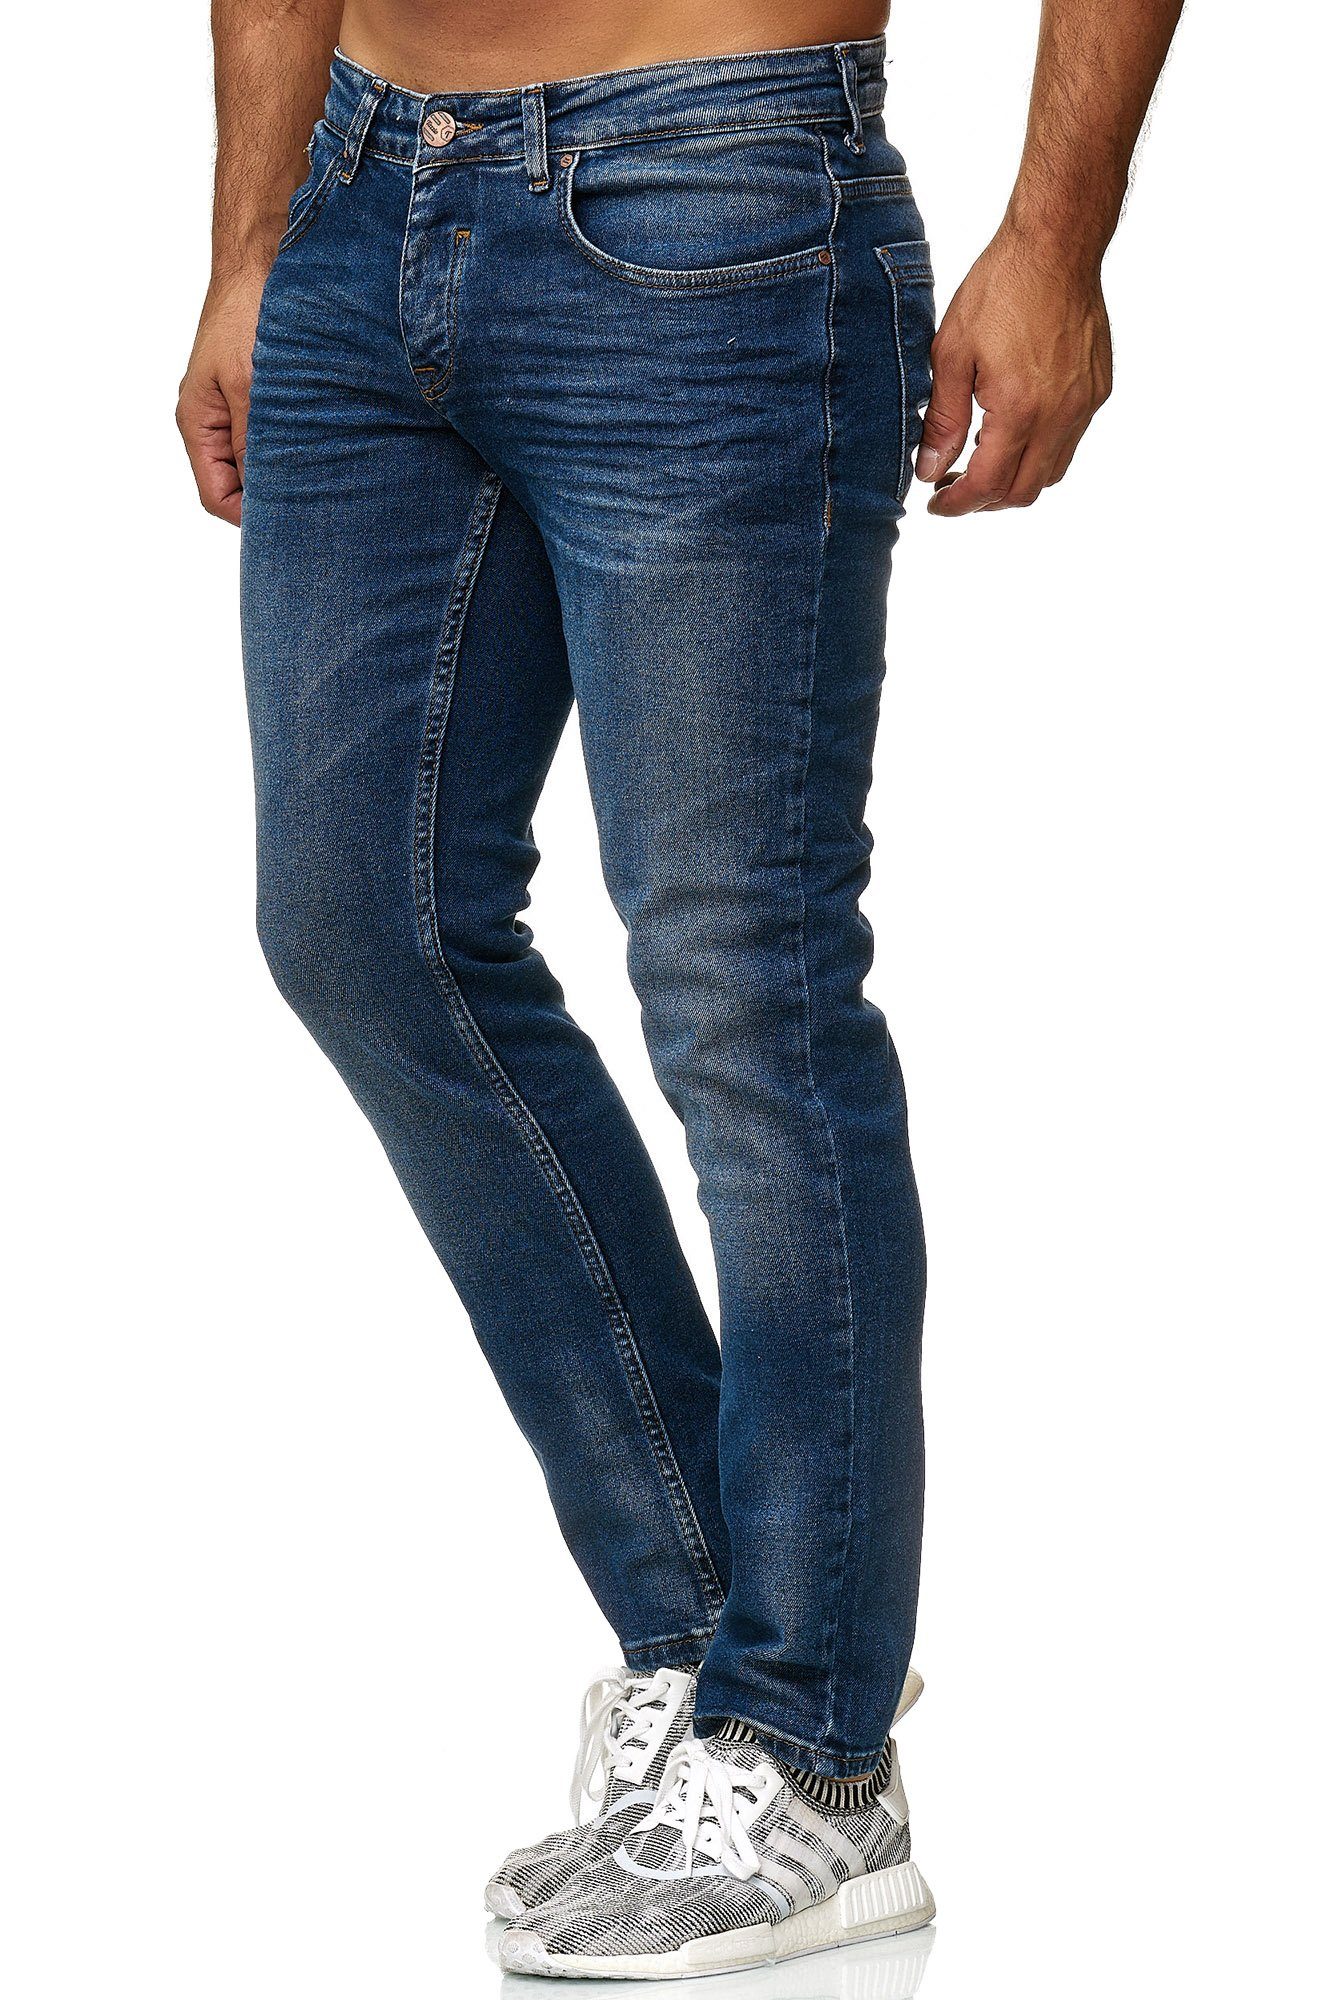 Tazzio Herren Denim Stretch-Jeans Slim Fit 16531 